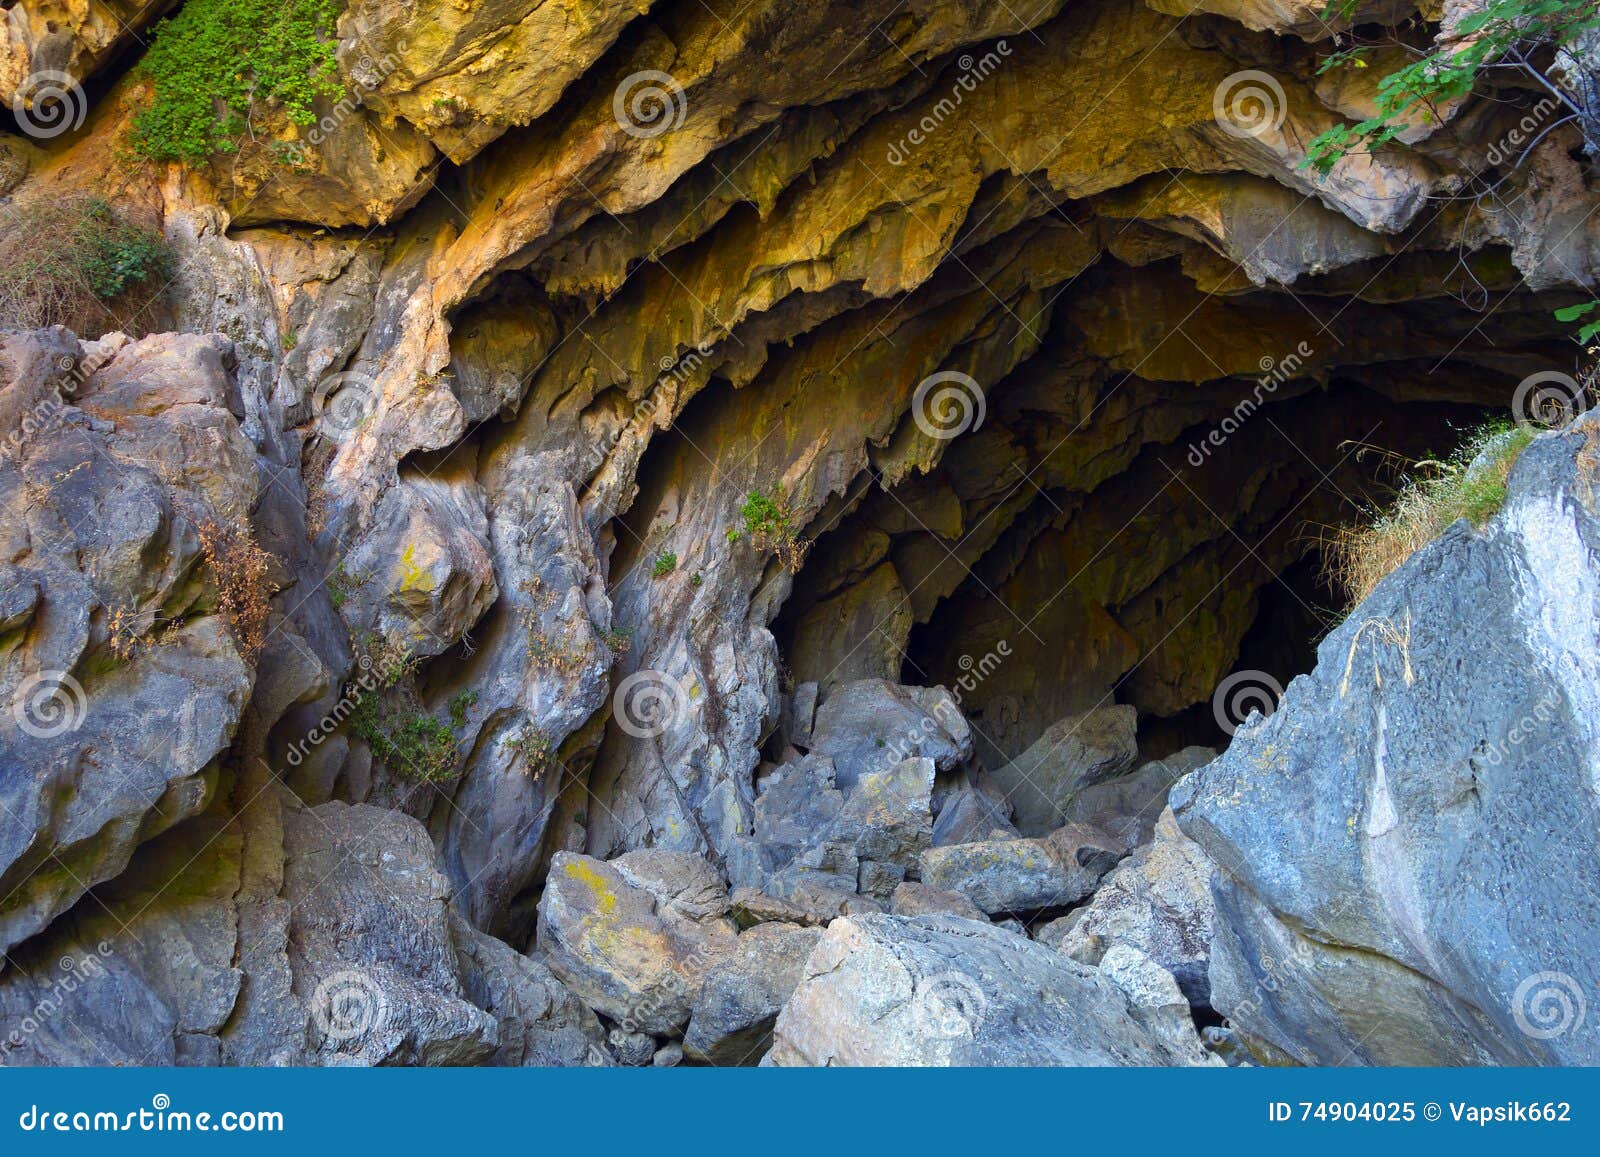 famous cave (cueva del gato) in benaojan, ronda, spain.